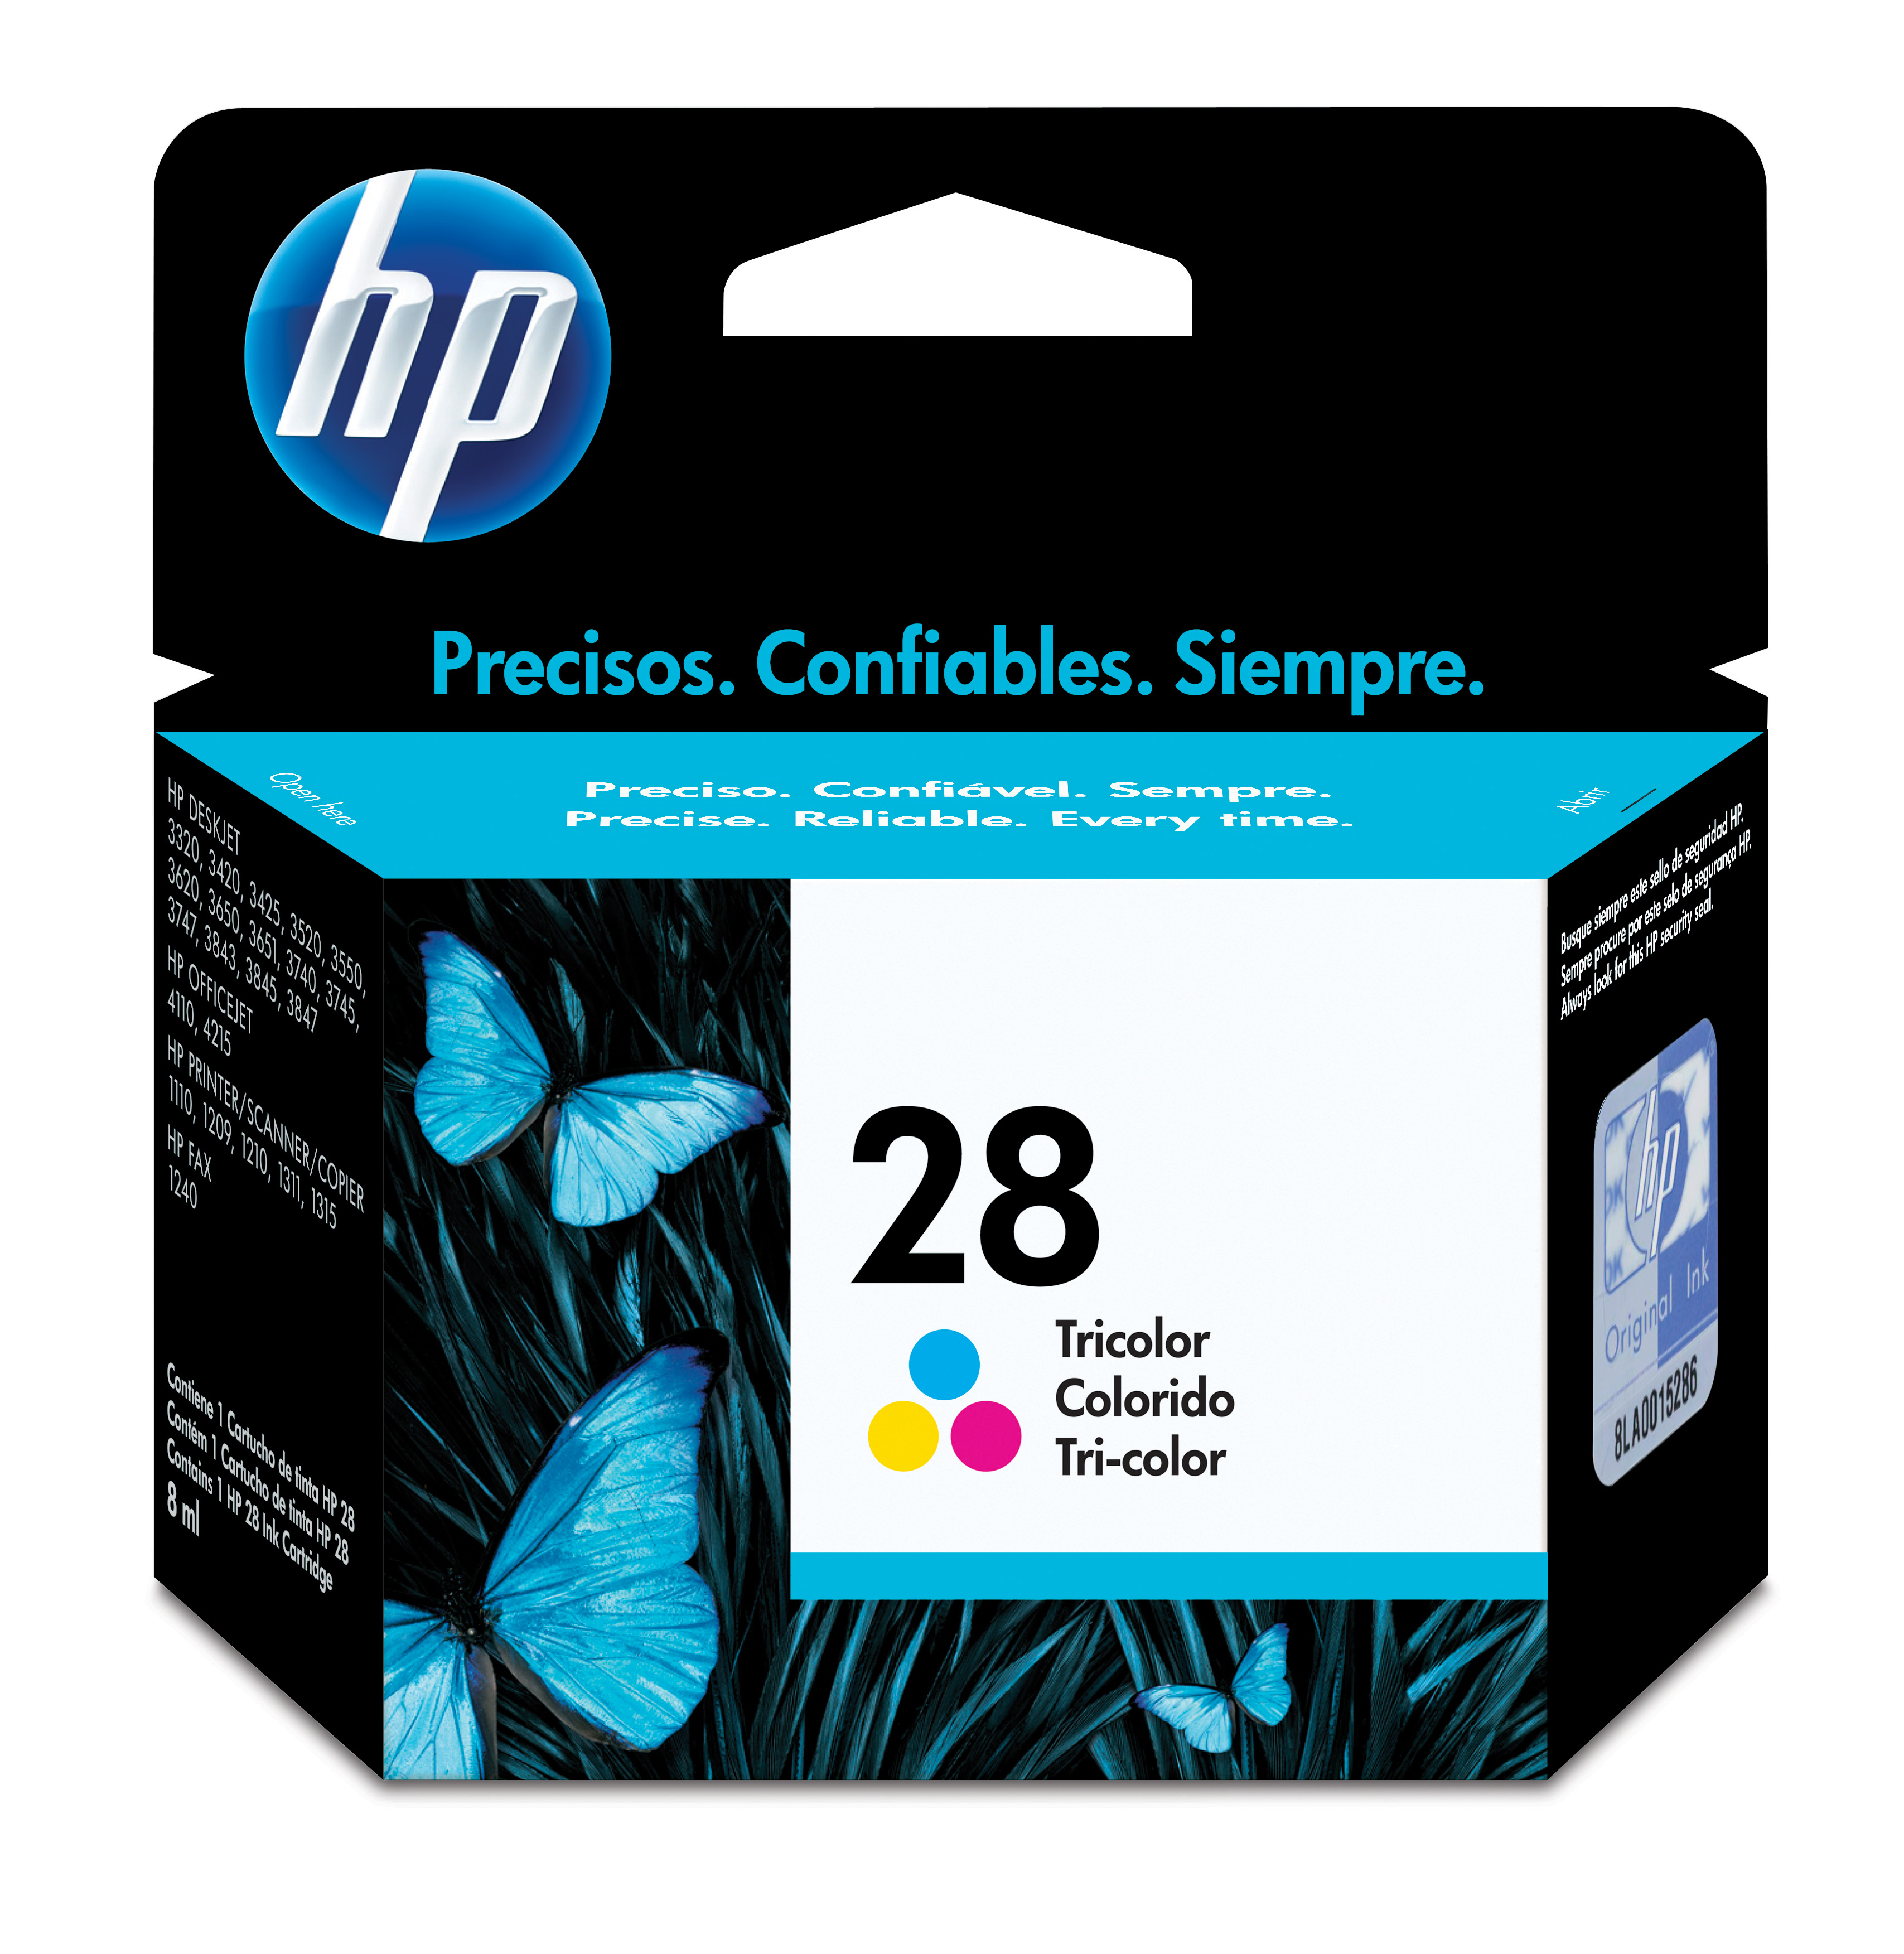 HP 28 ink cartridge